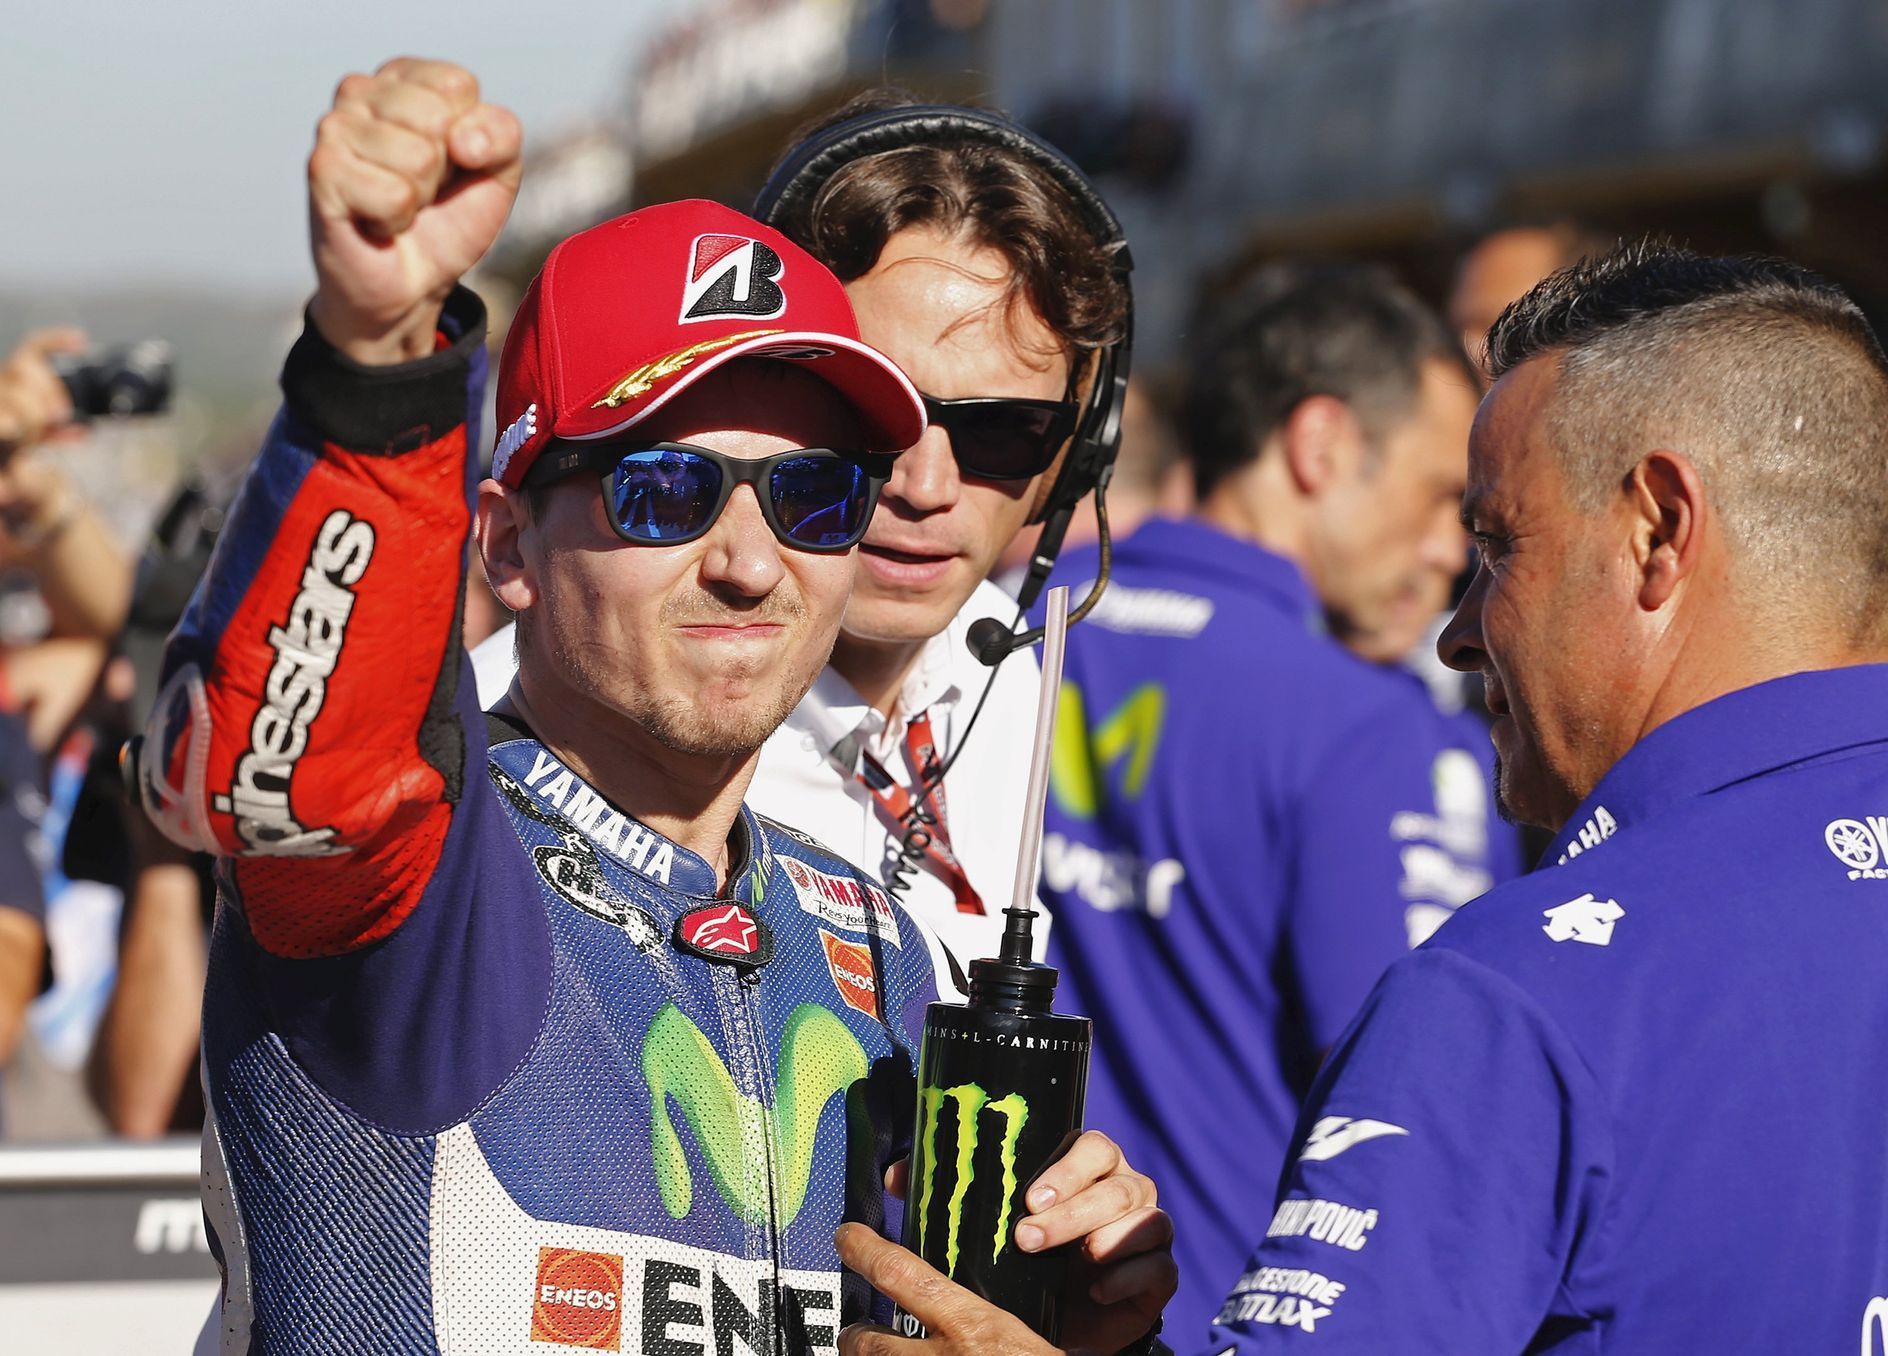 MotoGP 2015, VC Valencie: Jorge Lorenzo, Yamaha